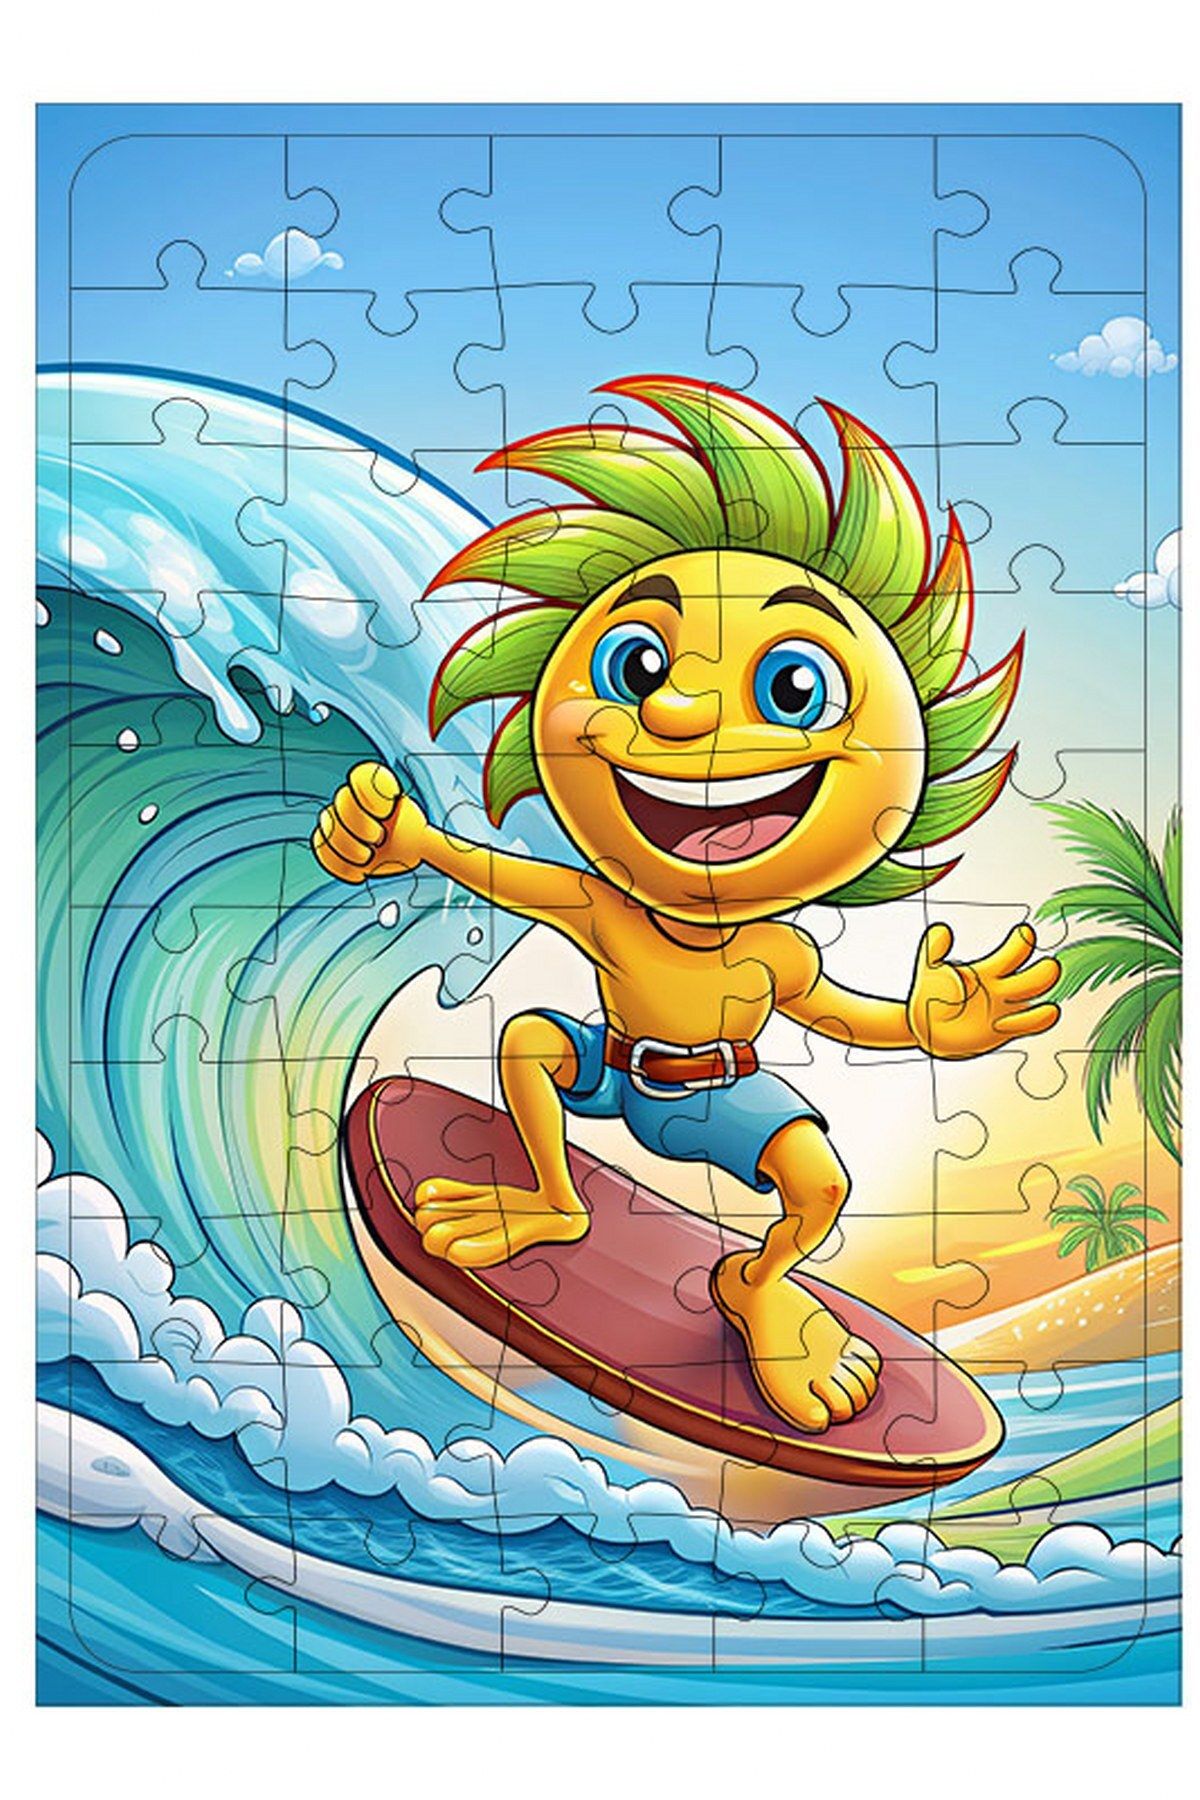 Tablomega Ahşap Mdf Puzzle Yapboz Denizde Sörf Yapan Çocuk 50 Parça 35*50 cm